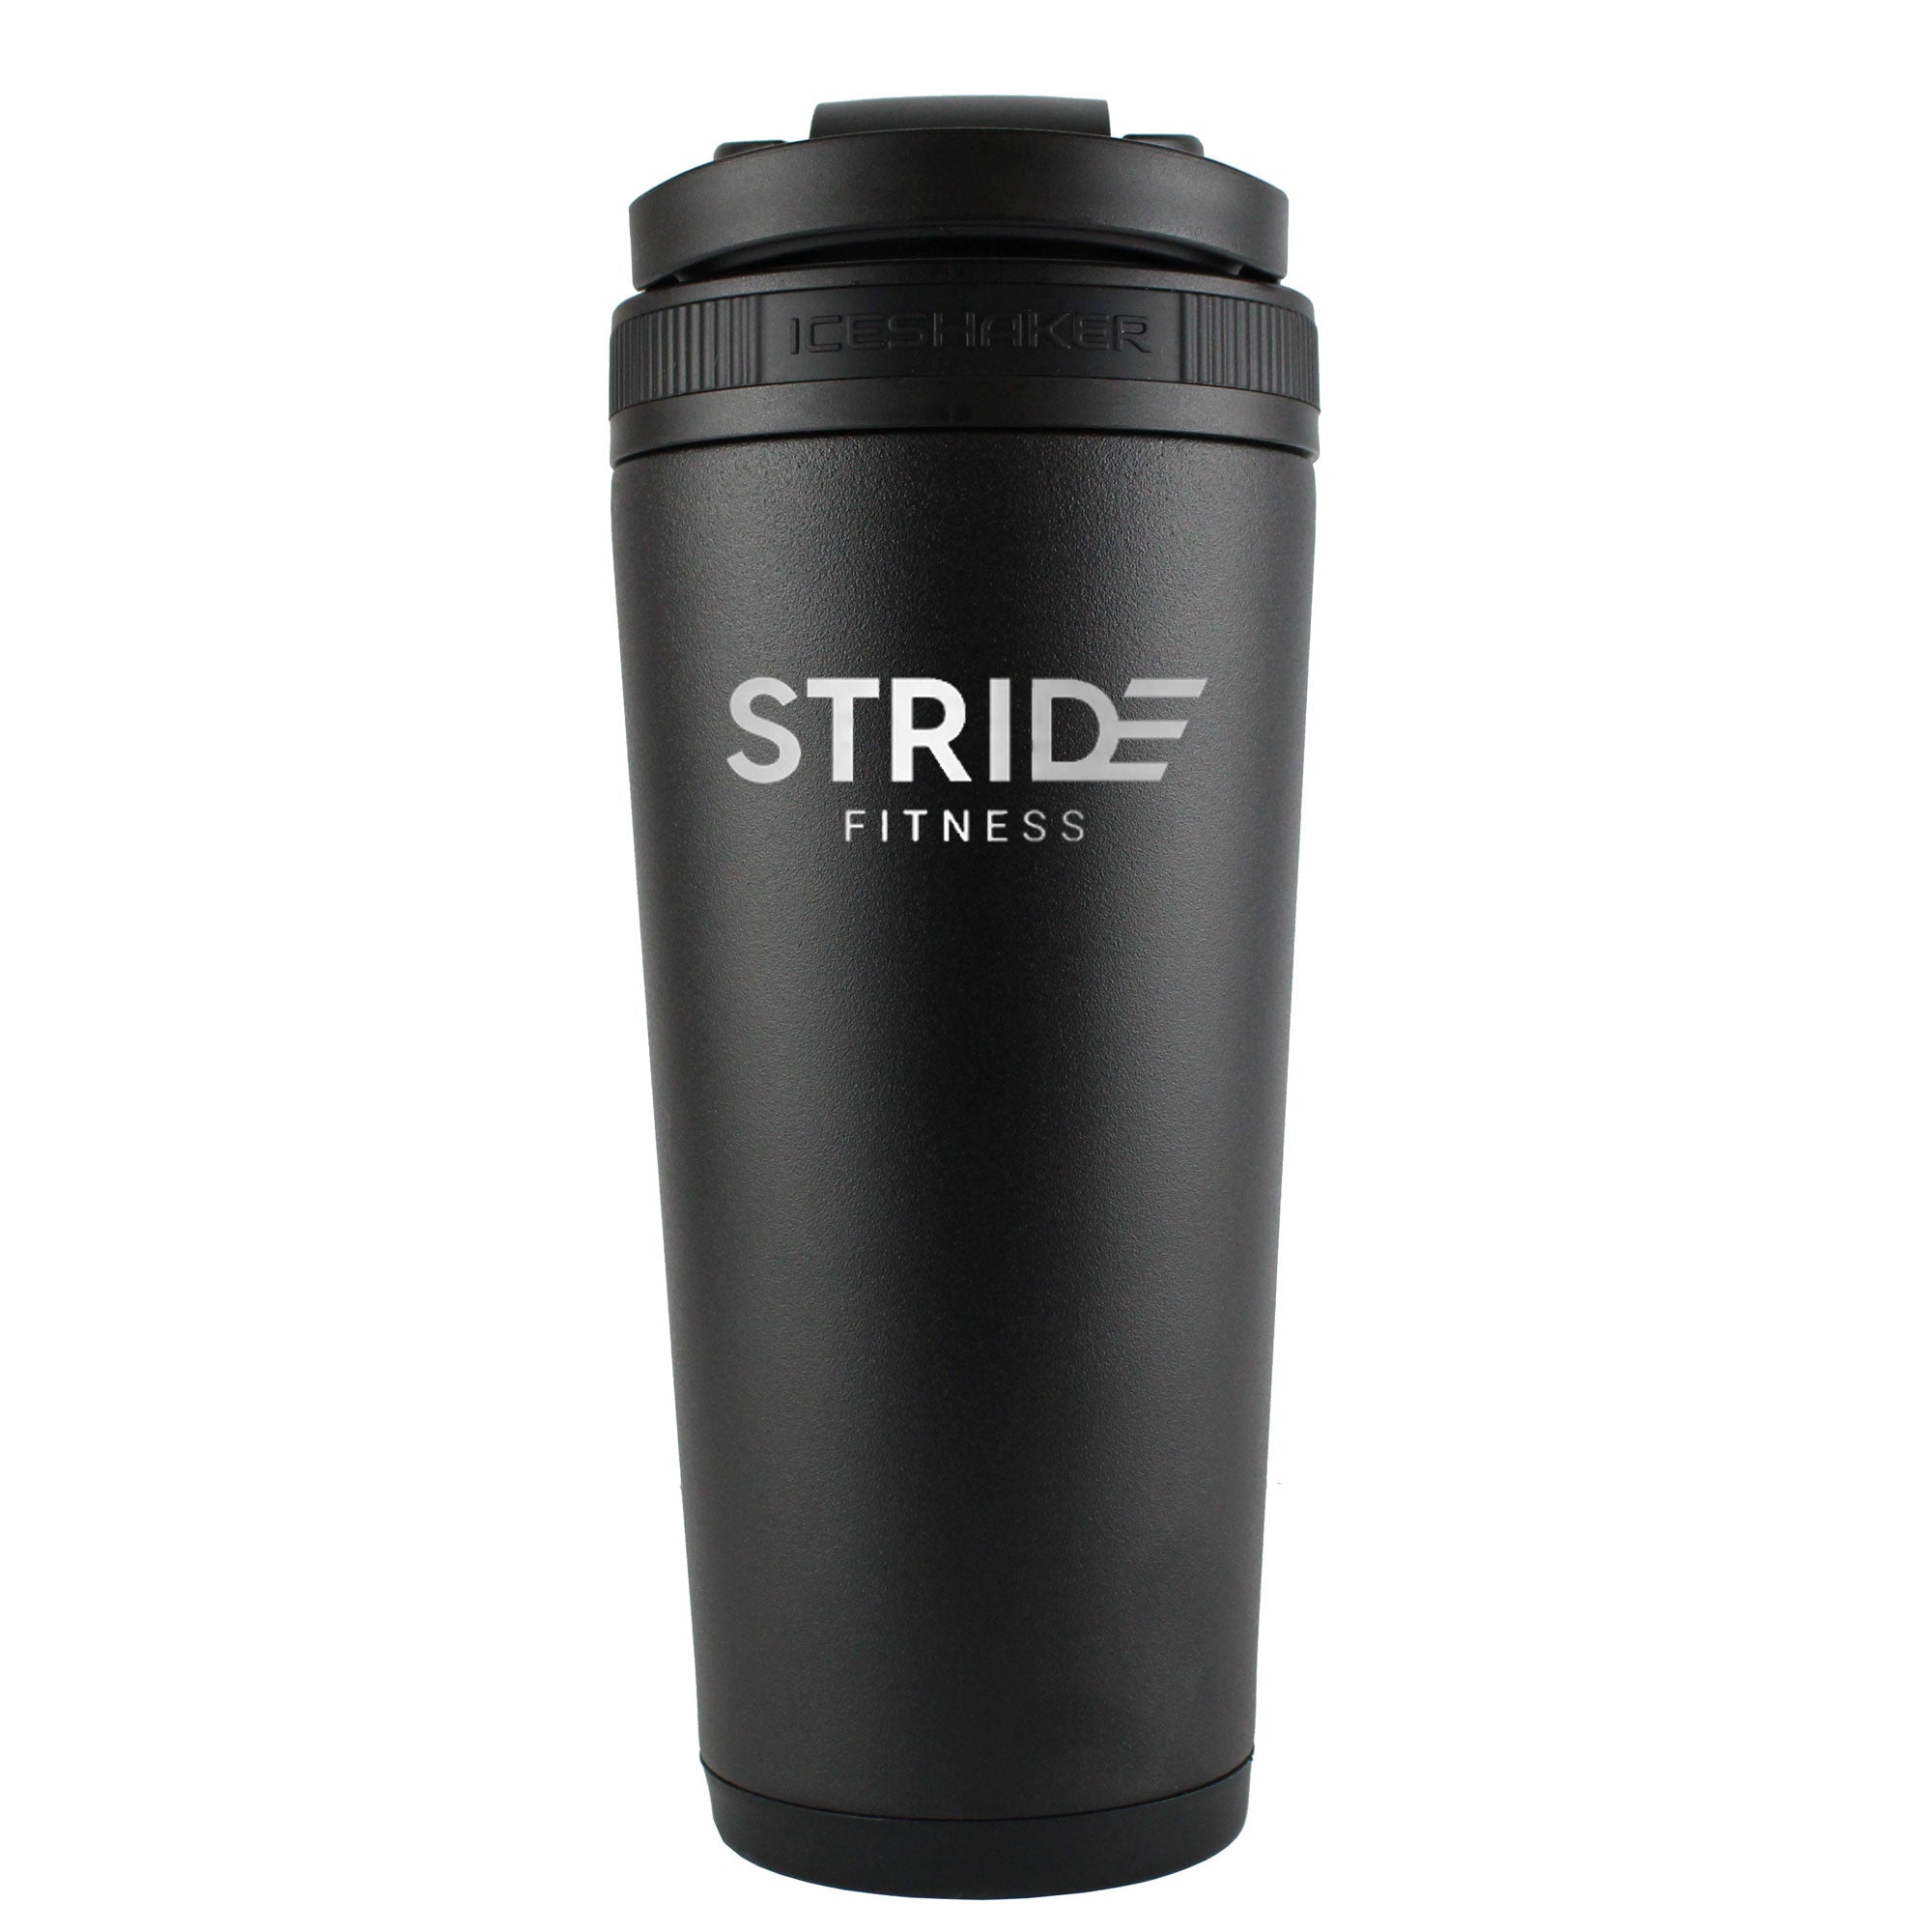 Stride Fitness 26oz Ice Shaker - Black